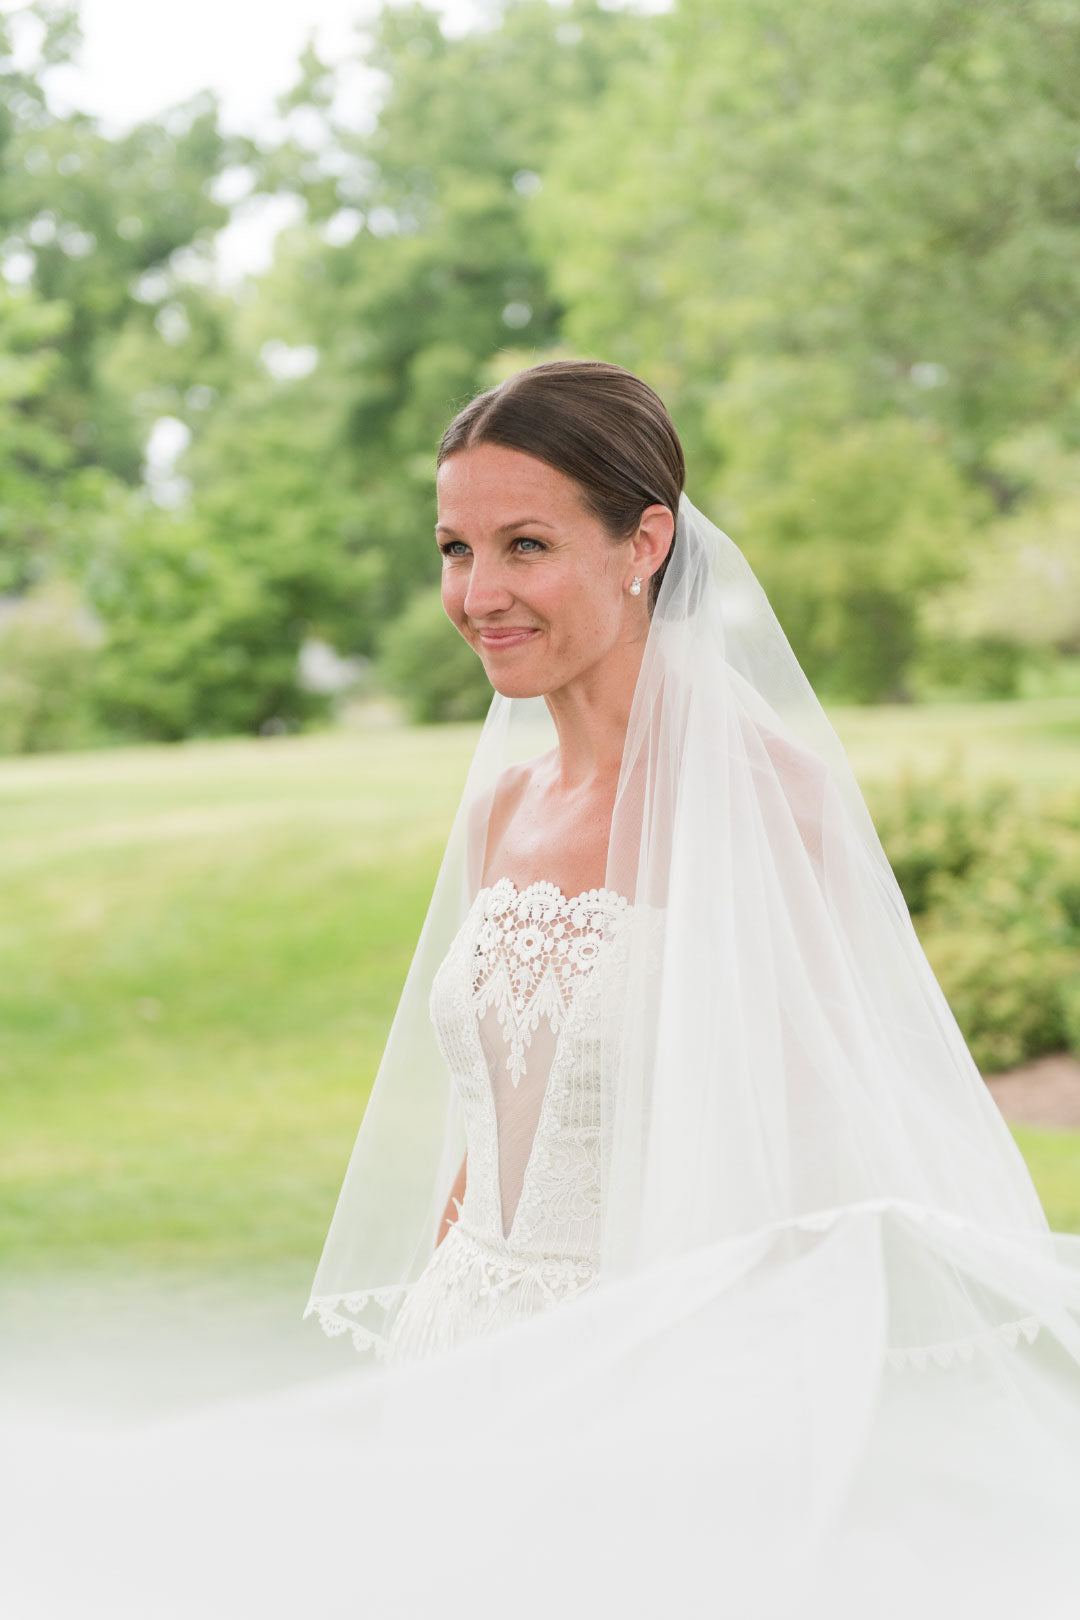 Bride in wedding veil